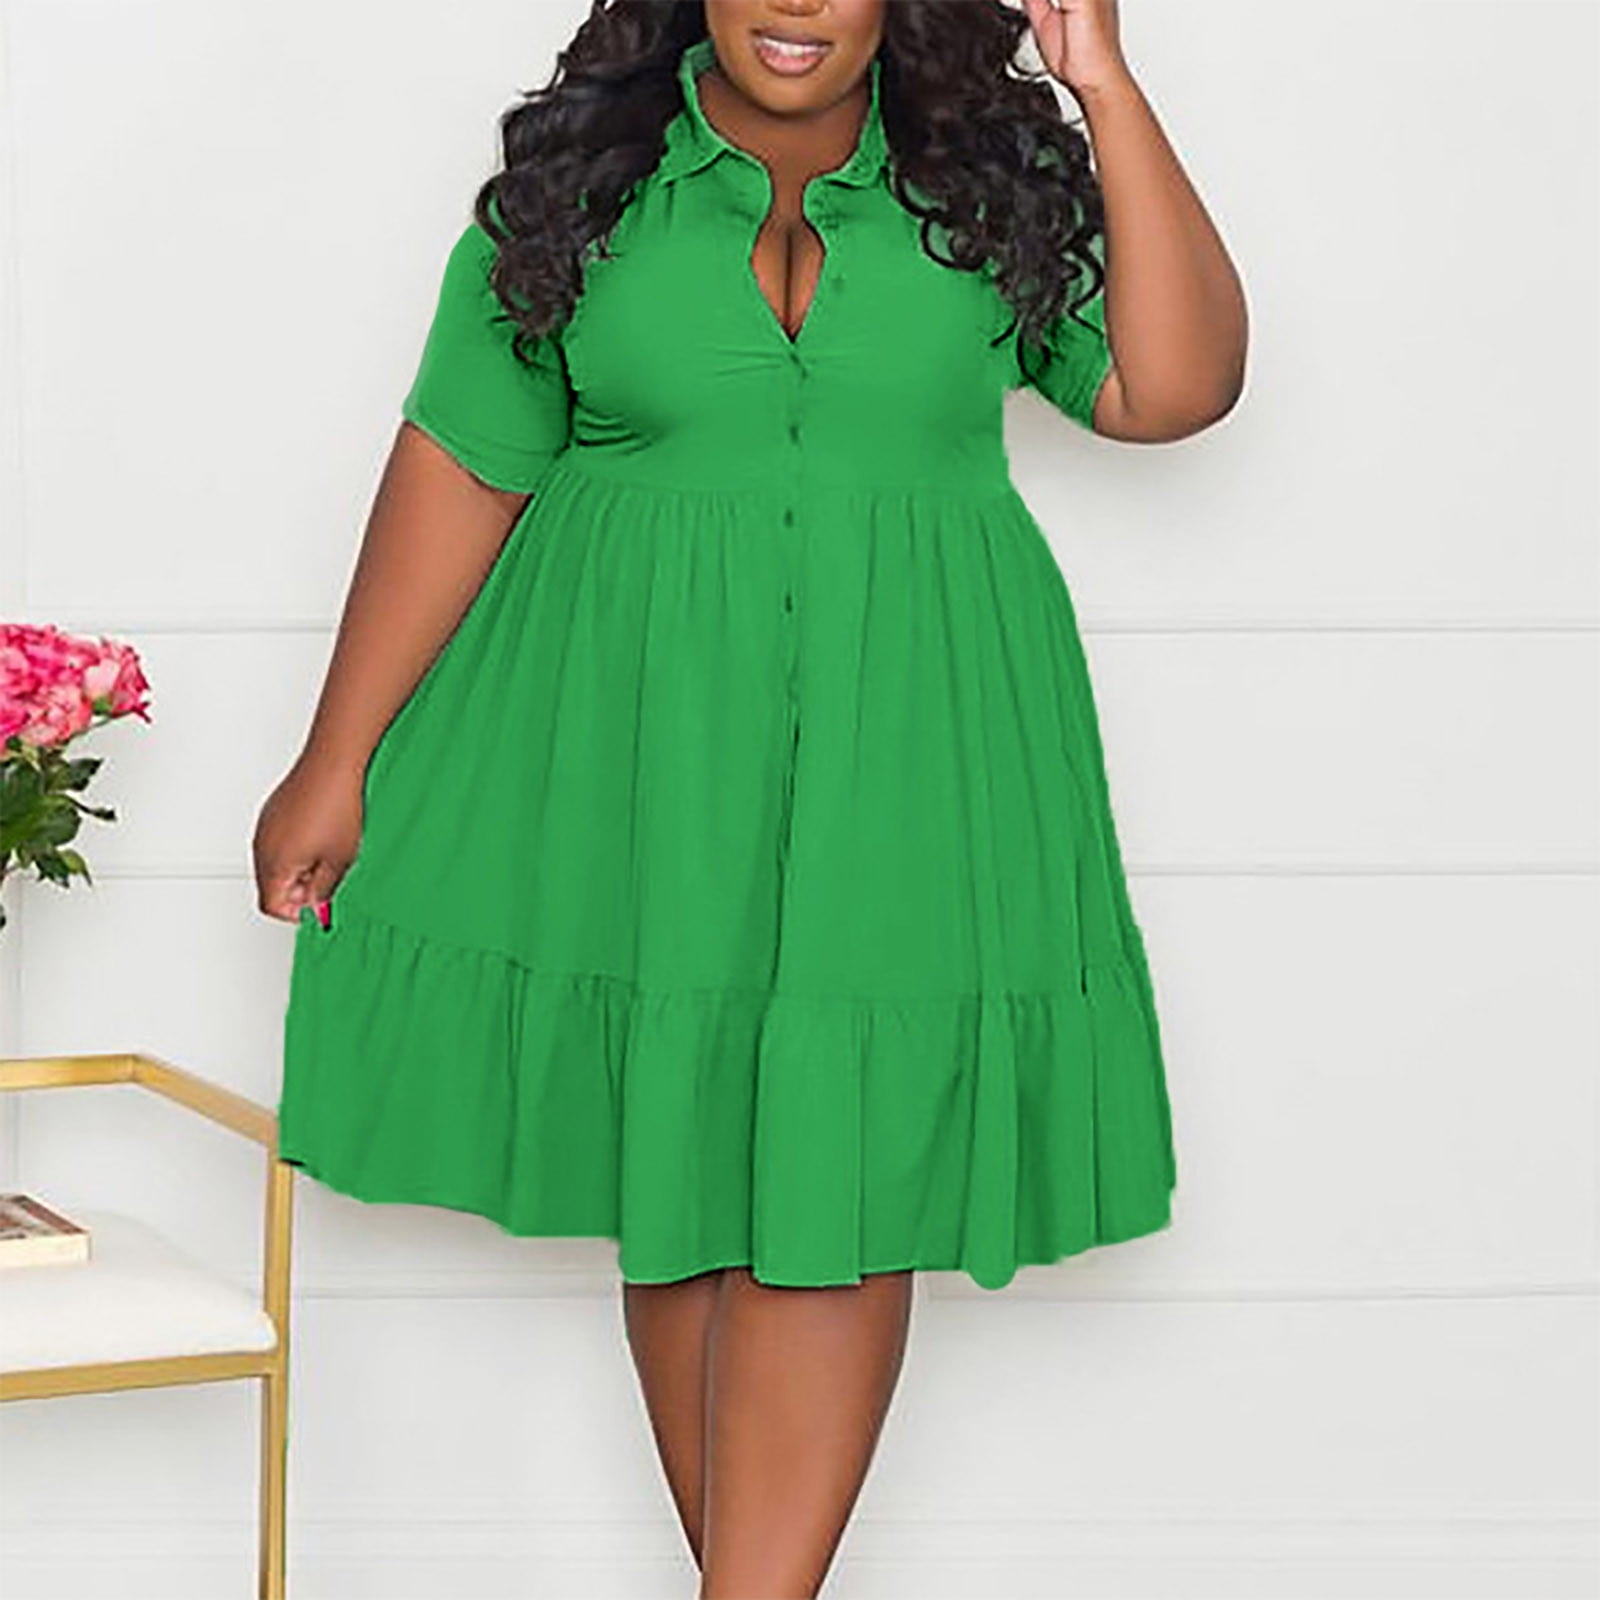 Size Summer Dresses, Solid Lapel Single Breasted Short Sleeve Shirt Dress, Oversize Mini Dress, Large Size Shirt Dress Green - Walmart.com